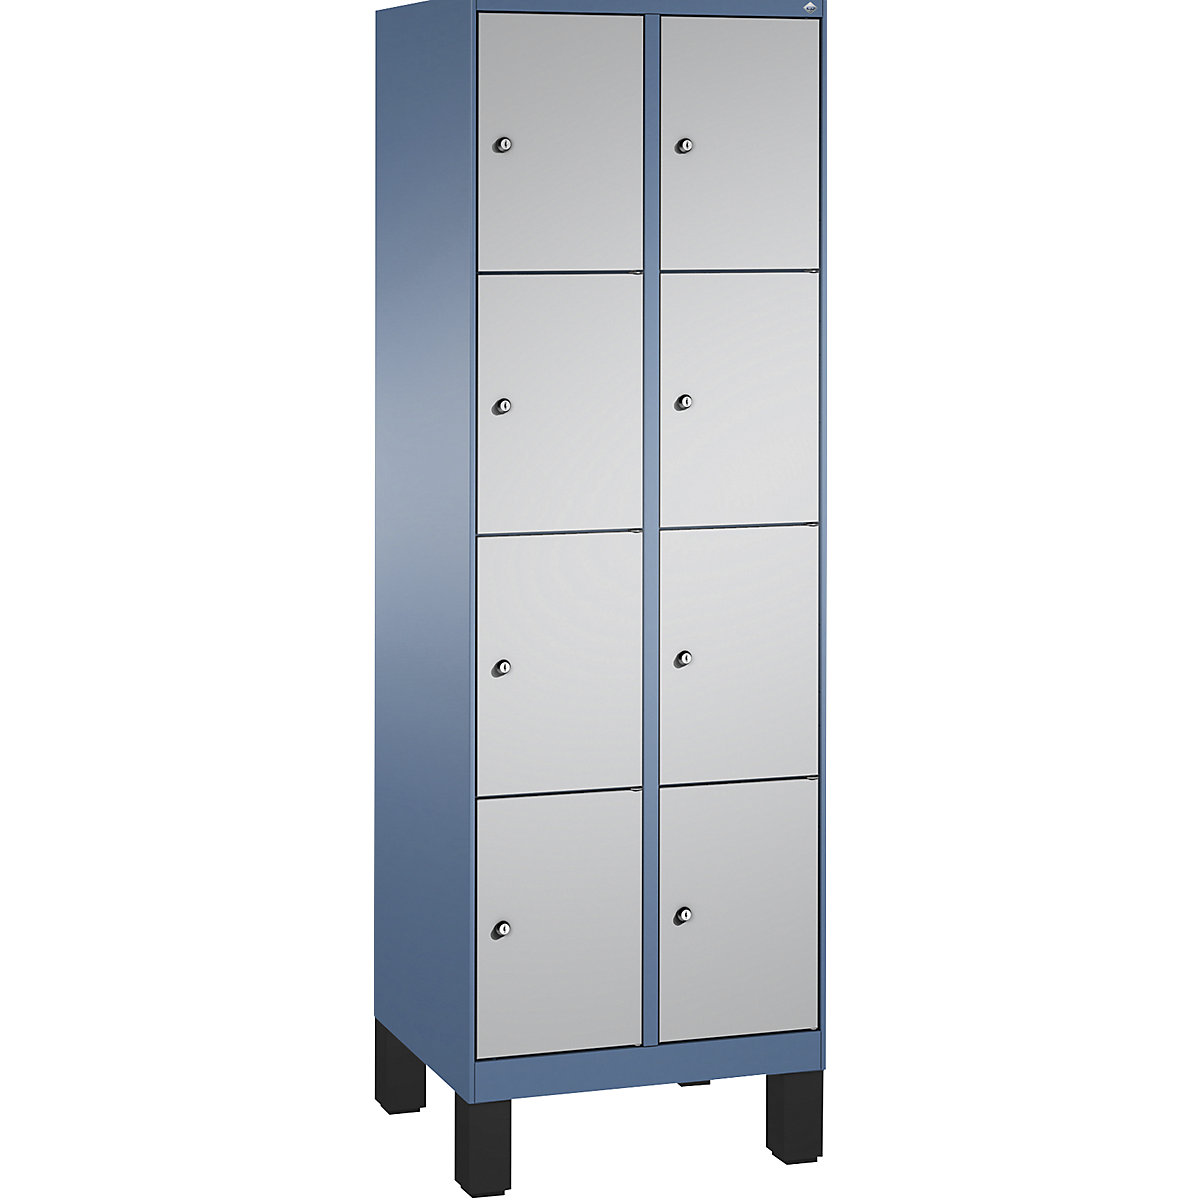 Armário de cacifos EVOLO, com pés – C+P, 2 compartimentos, 4 cacifos cada, largura do compartimento 300 mm, azul distante / cinza alumínio-8